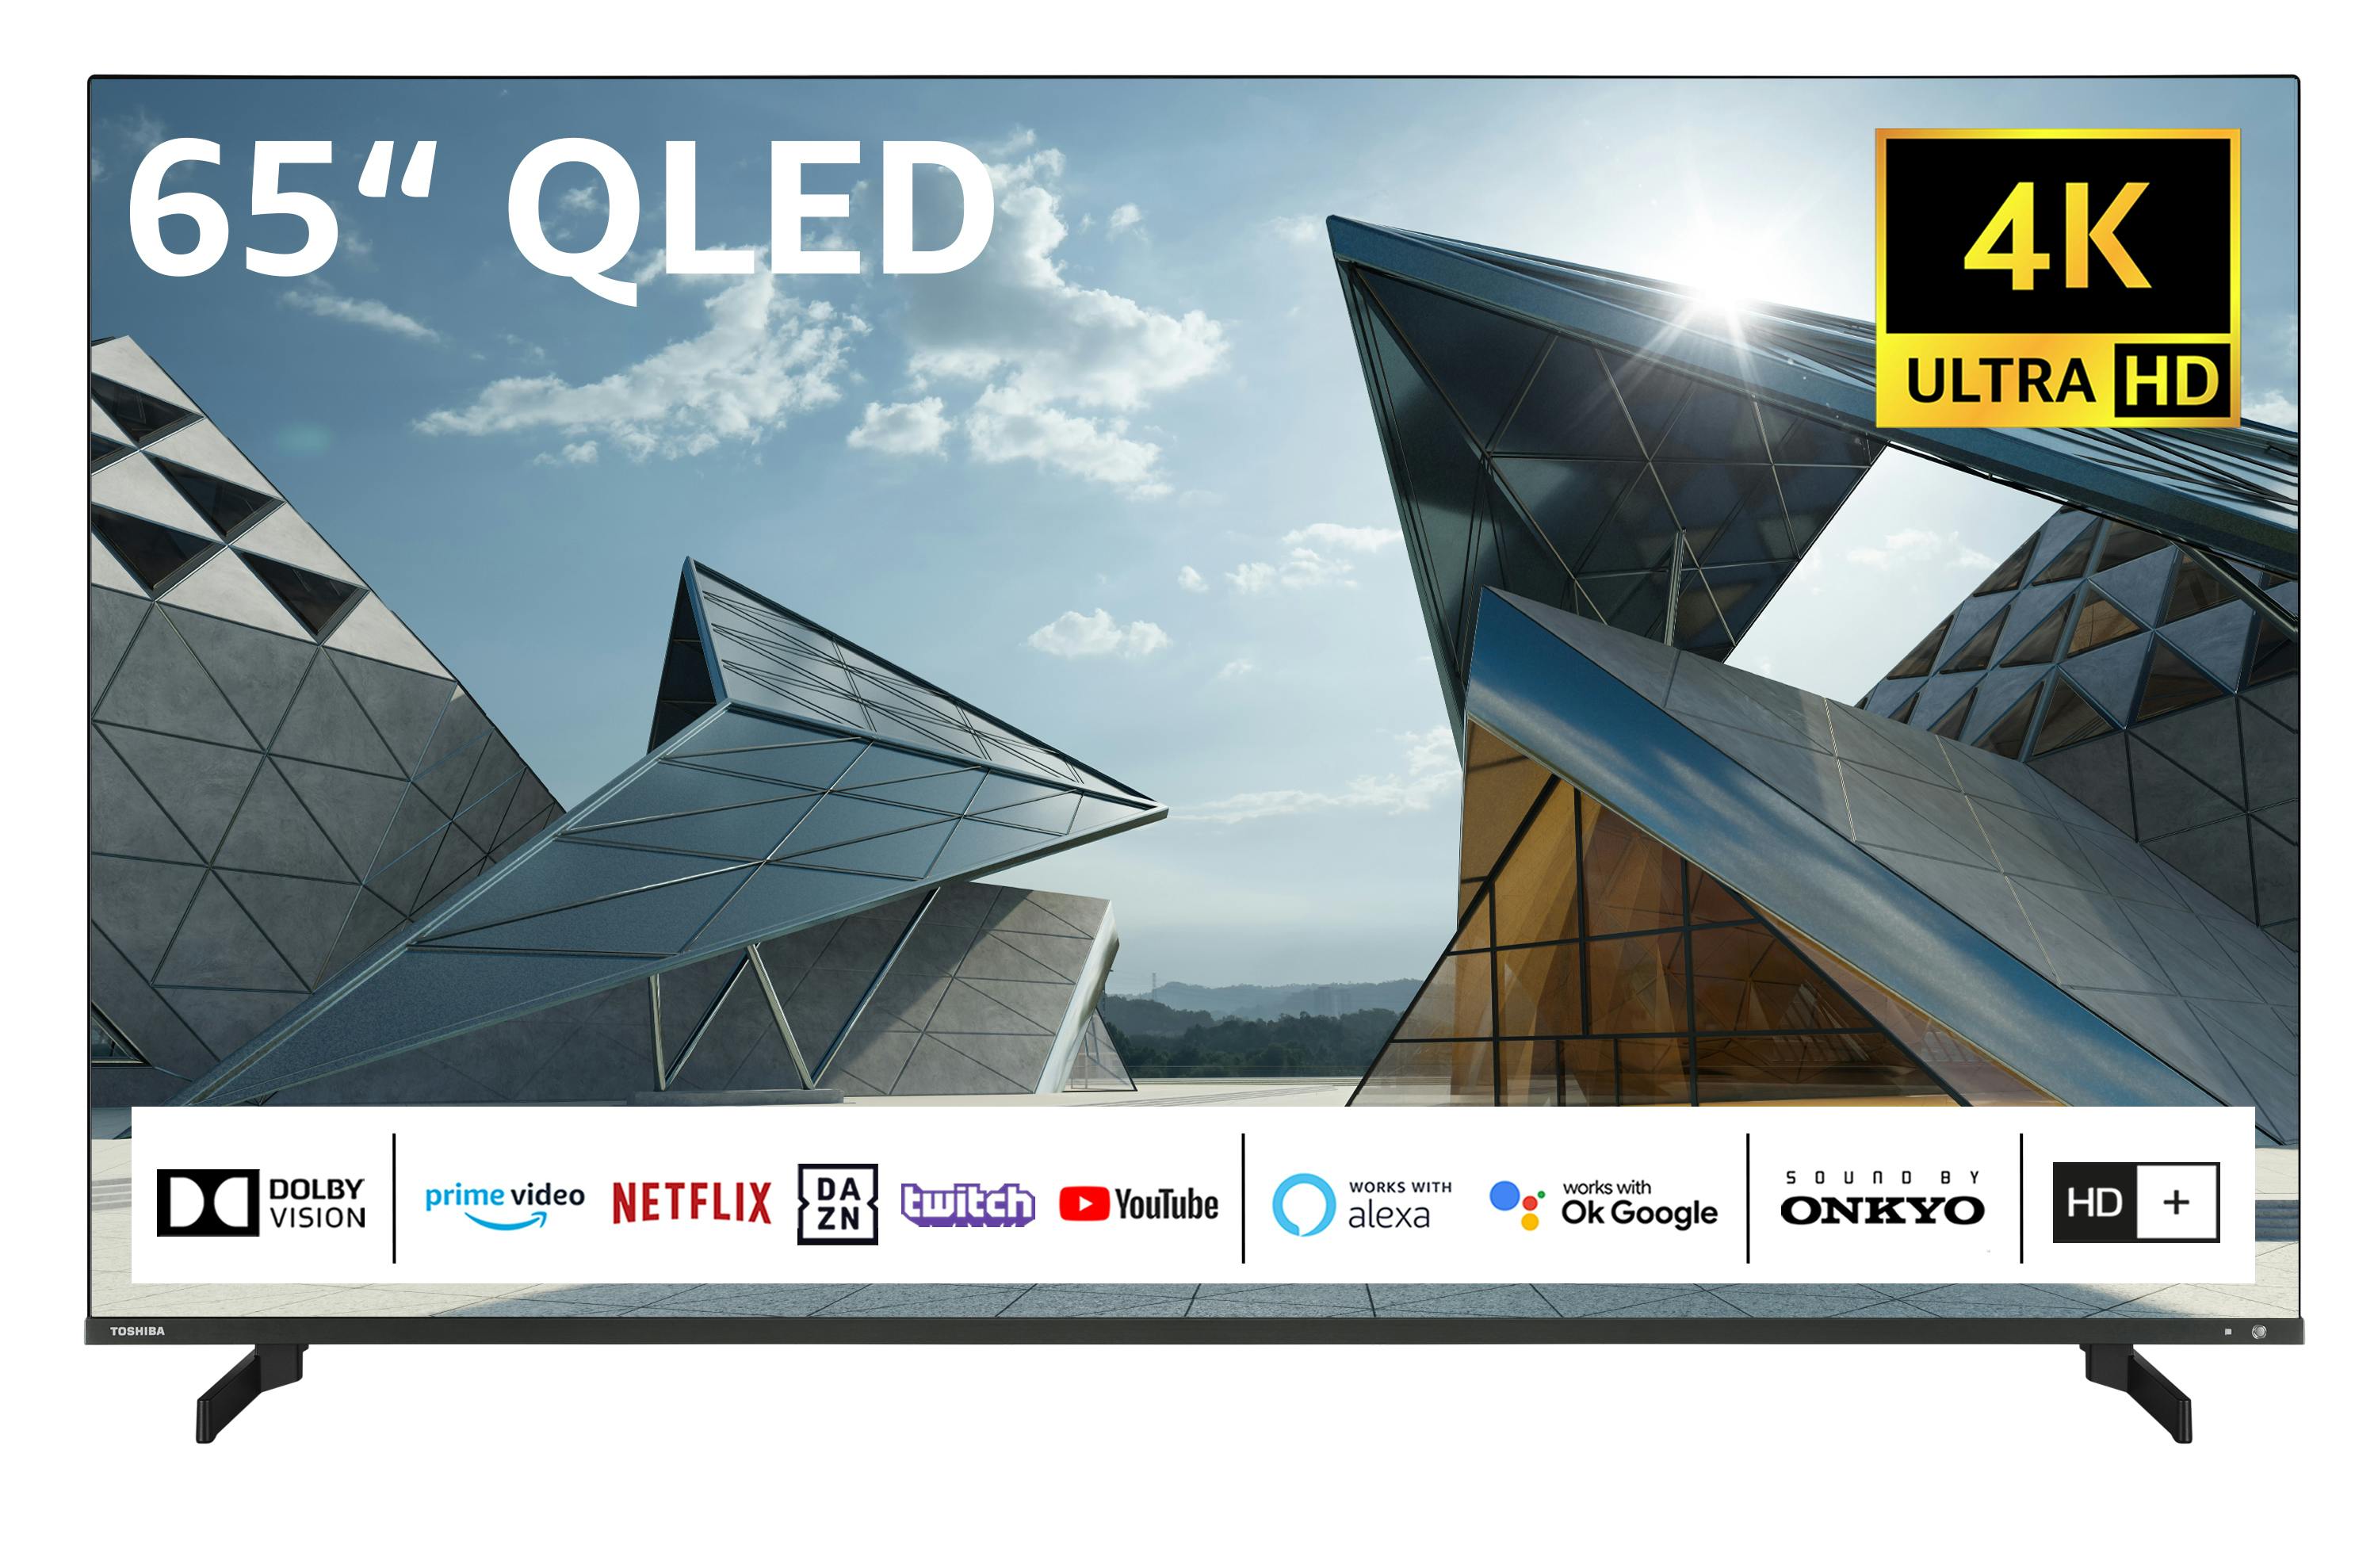 TV - Marktplatz Sound Ultra QLED Onkyo) Monate Inkl. Bluetooth, 6 HDR Zoll Toshiba 65 (4K 65QL5D63DAY Fernseher/Smart HD+ | HD, Dolby by Vision, METRO Triple-Tuner,